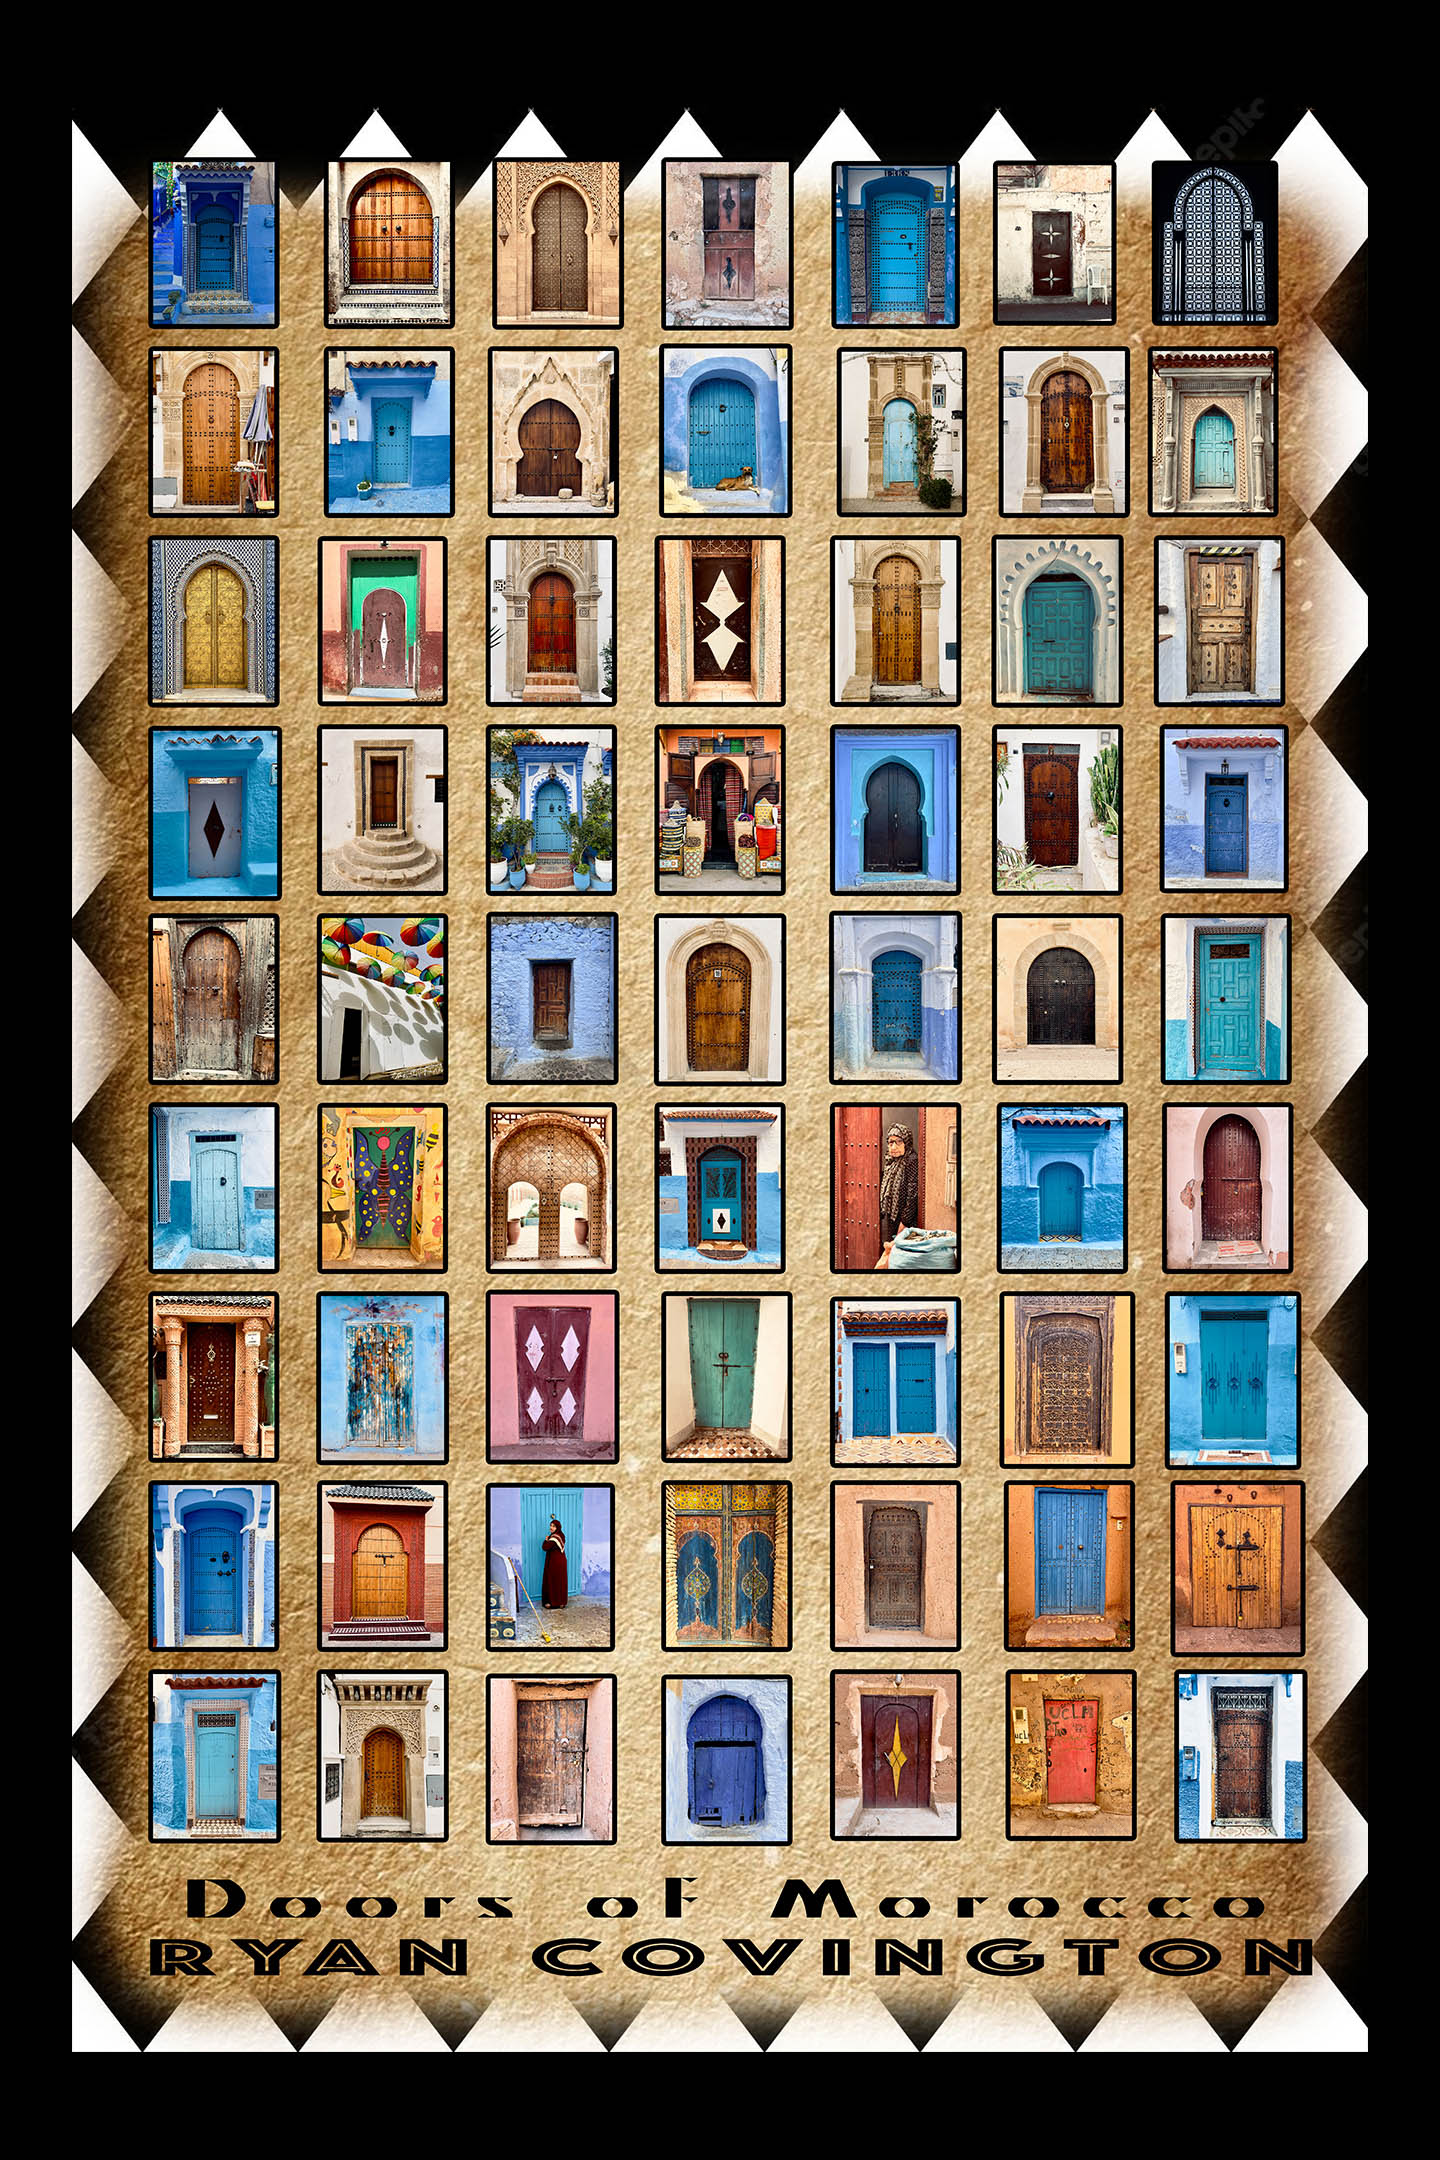 Doors of Morocco #2 by Ryan Covington